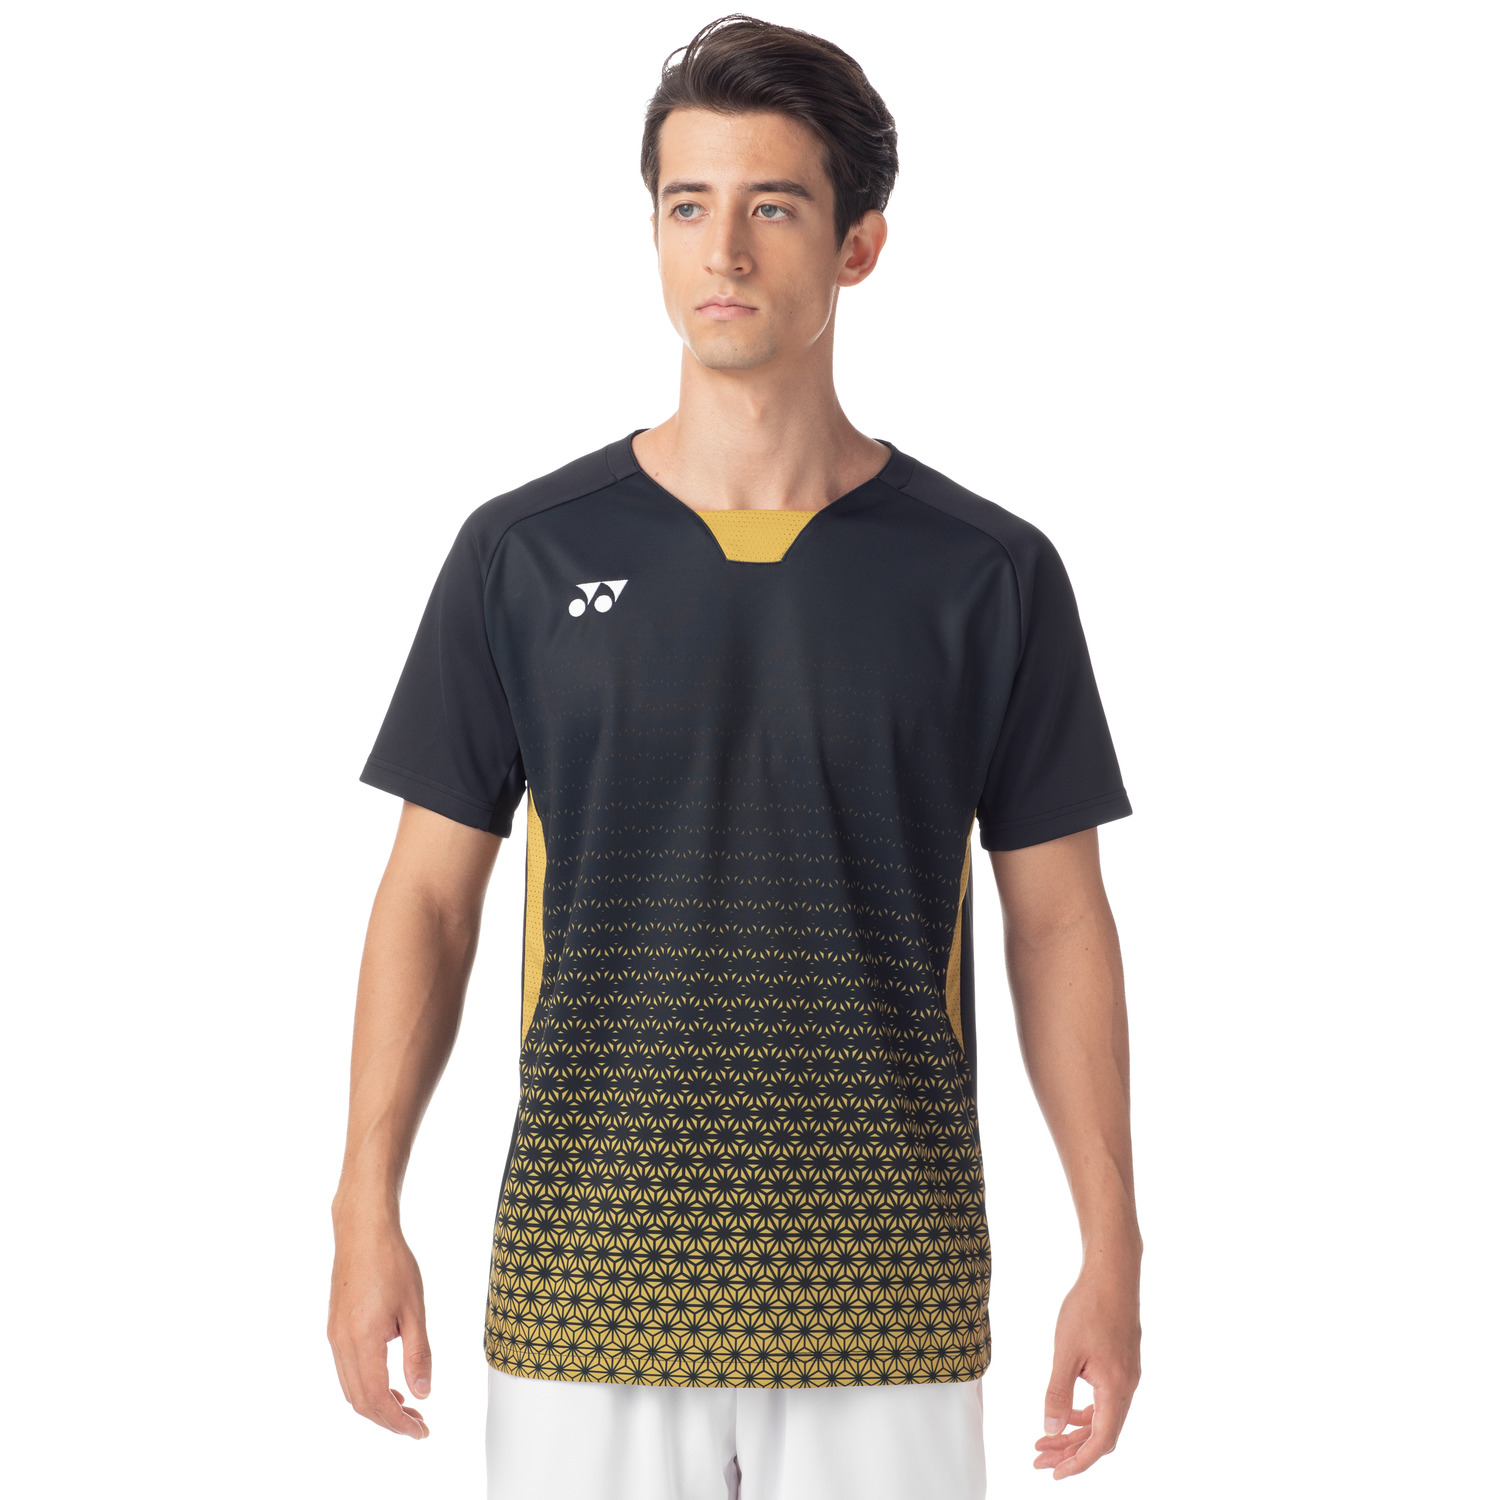 Yonex Japan National Badminton/ Sports Shirt 10615YX Black/ Gold MEN'S